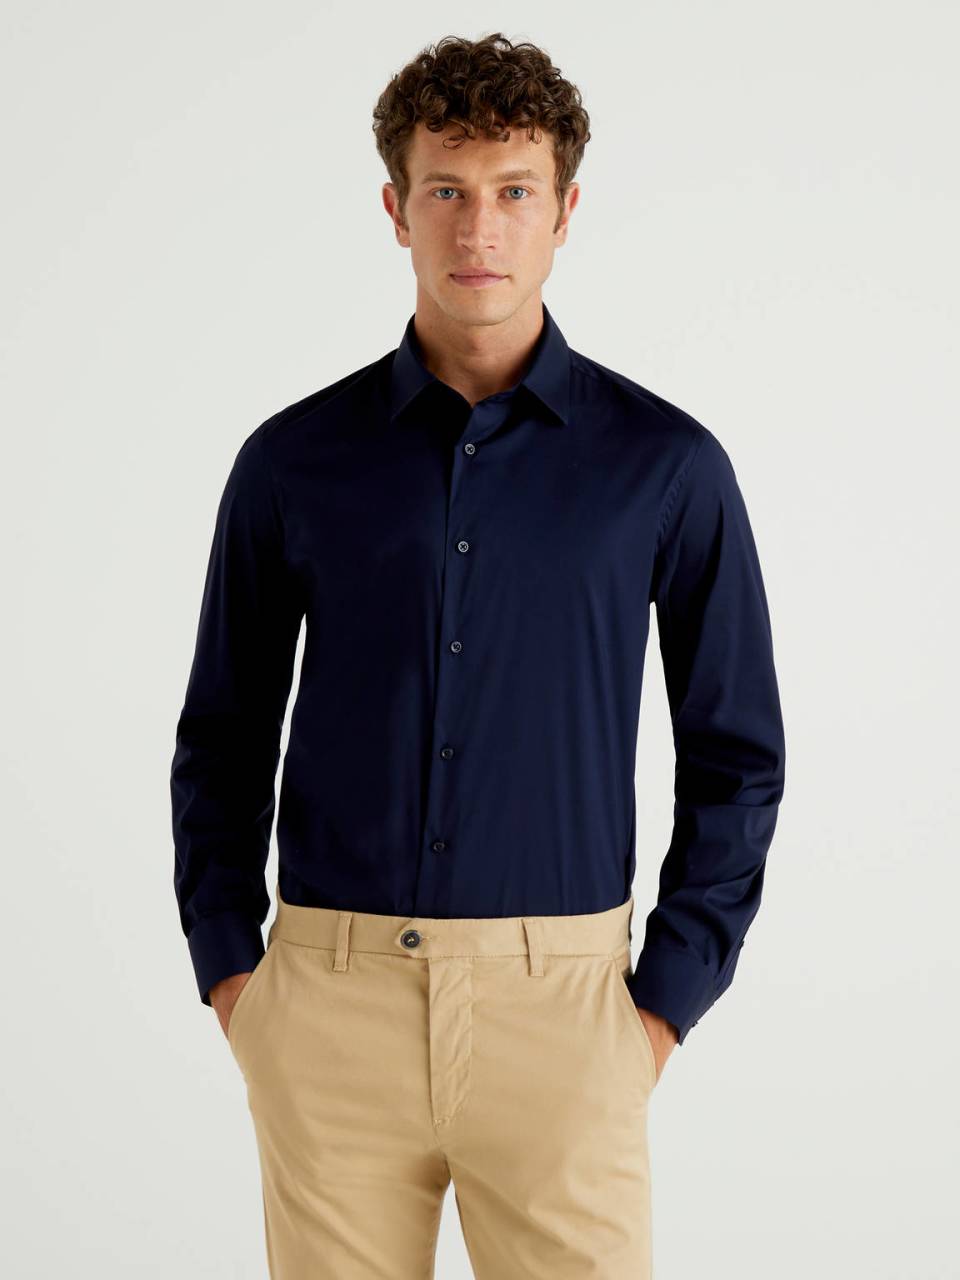 Benetton Solid color slim fit shirt. 1